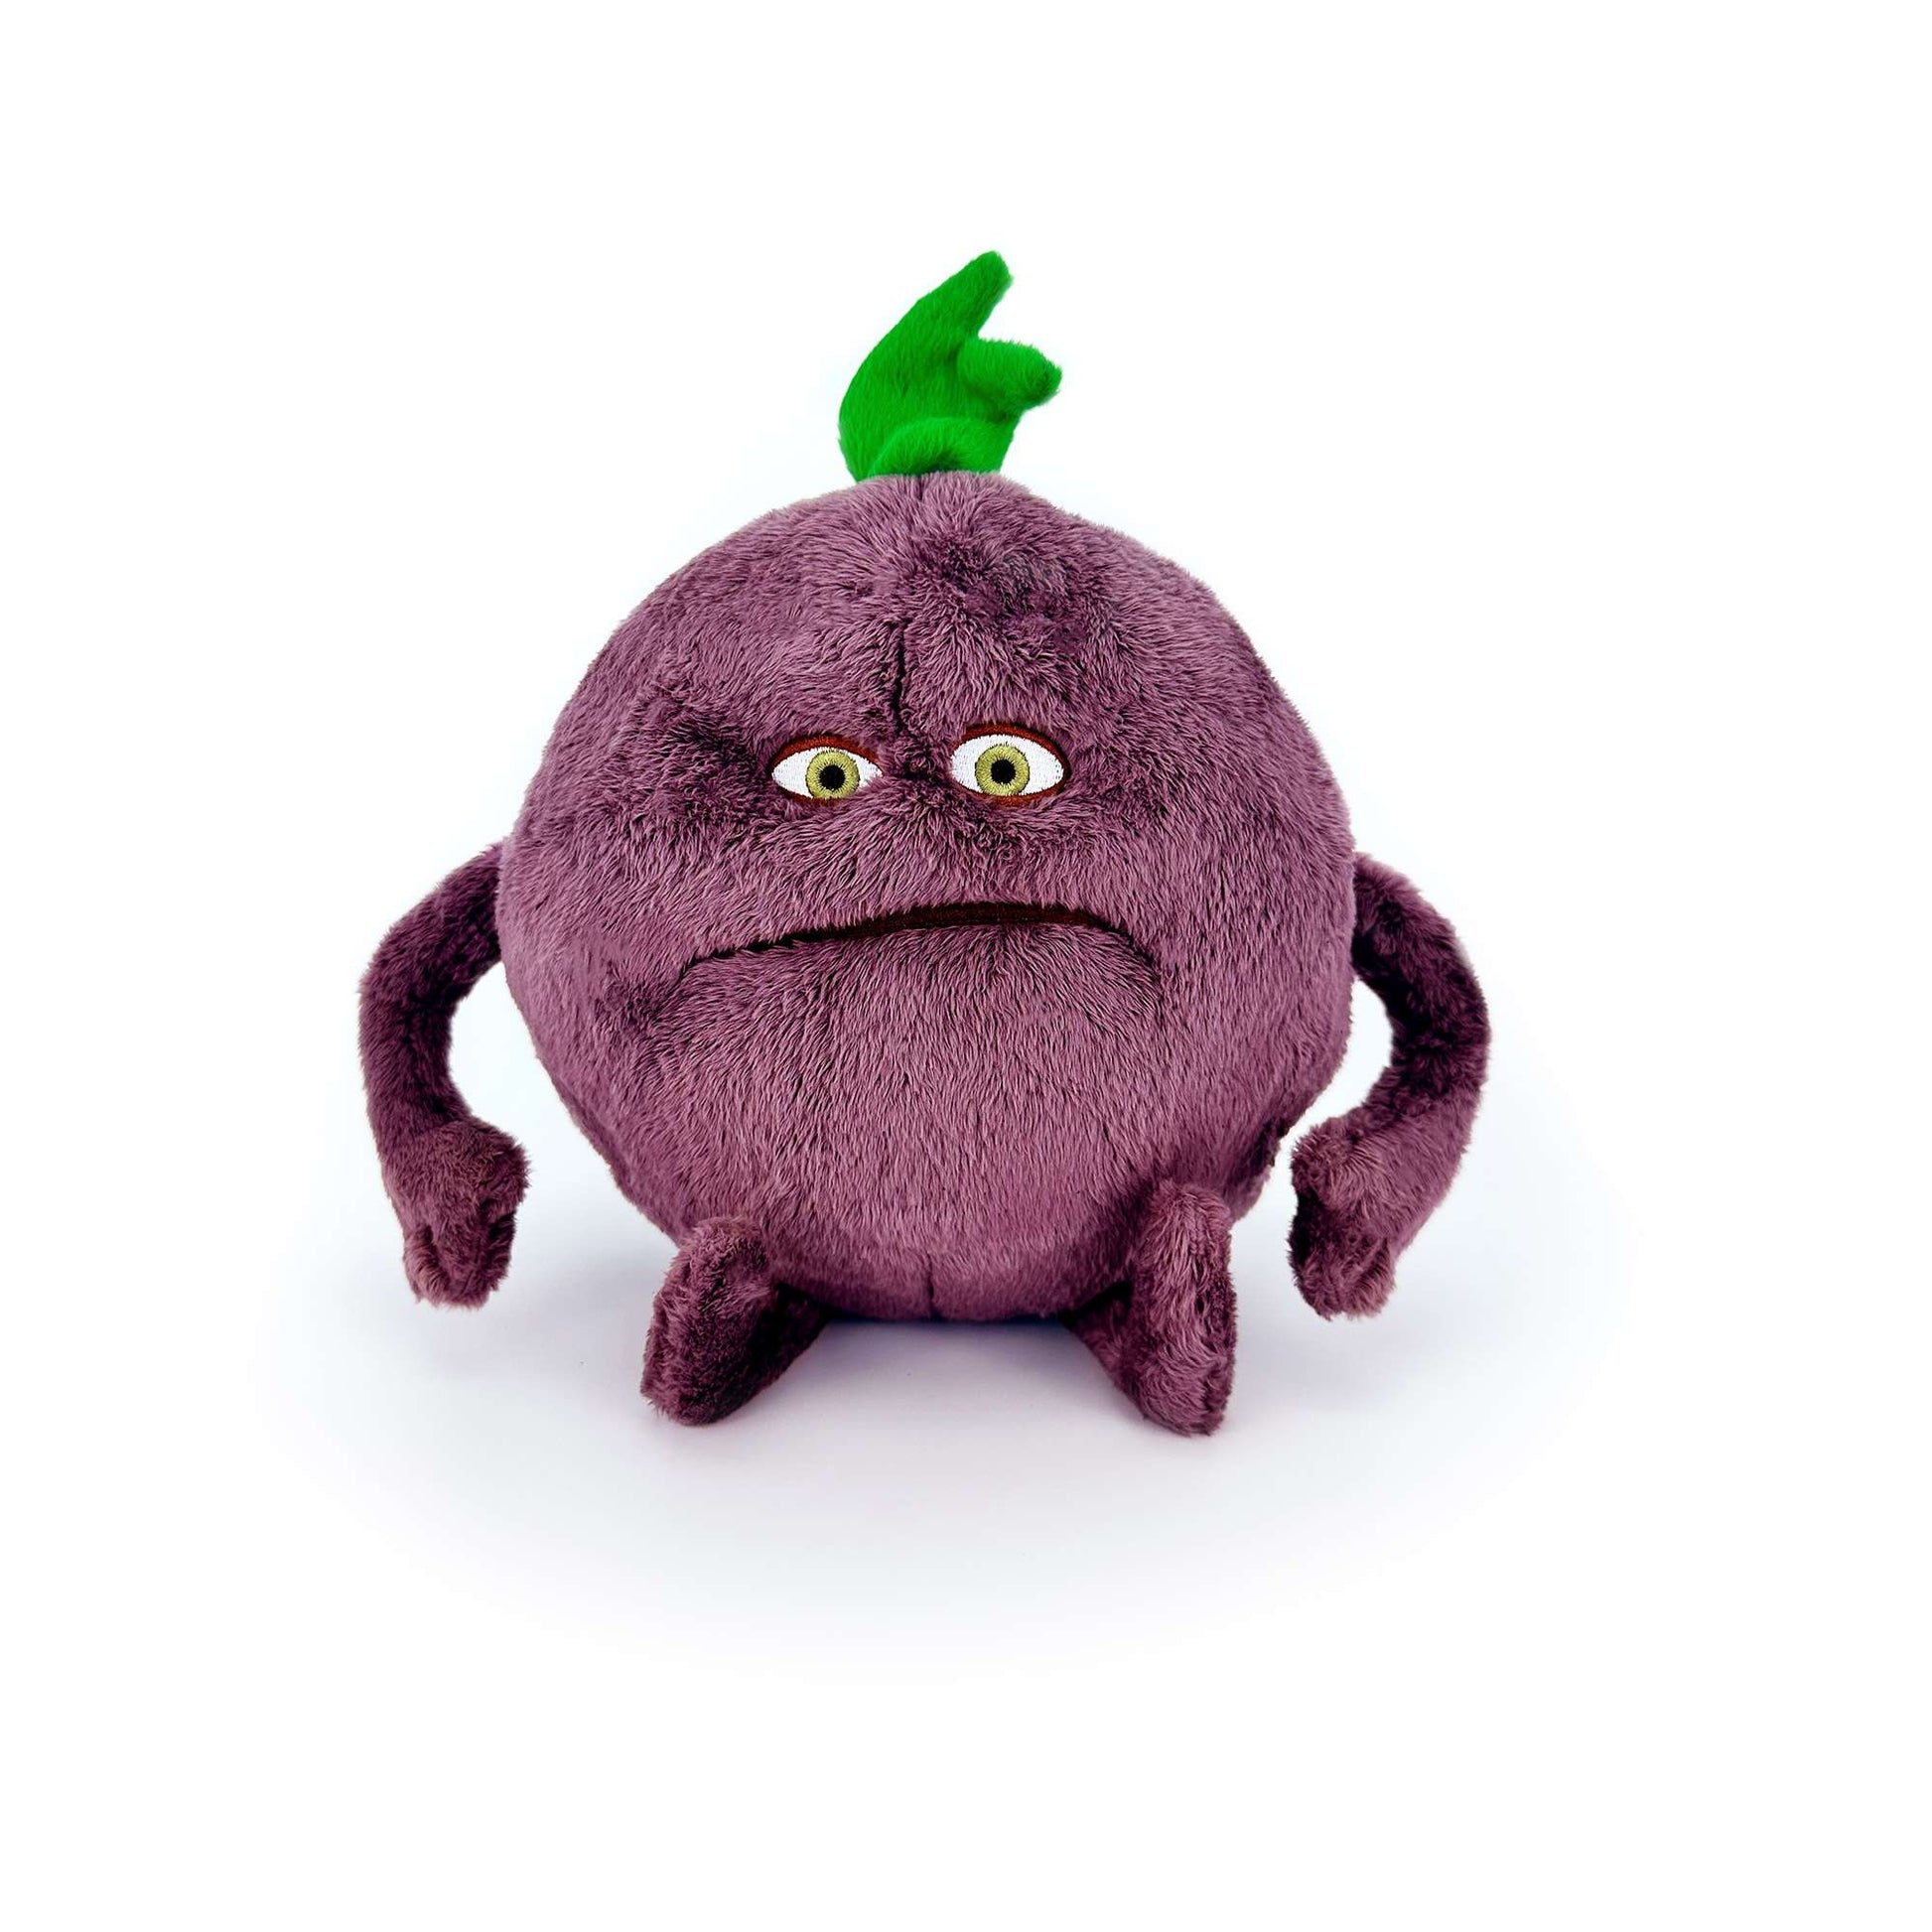 Angry Purple Monster Stuffed Animal